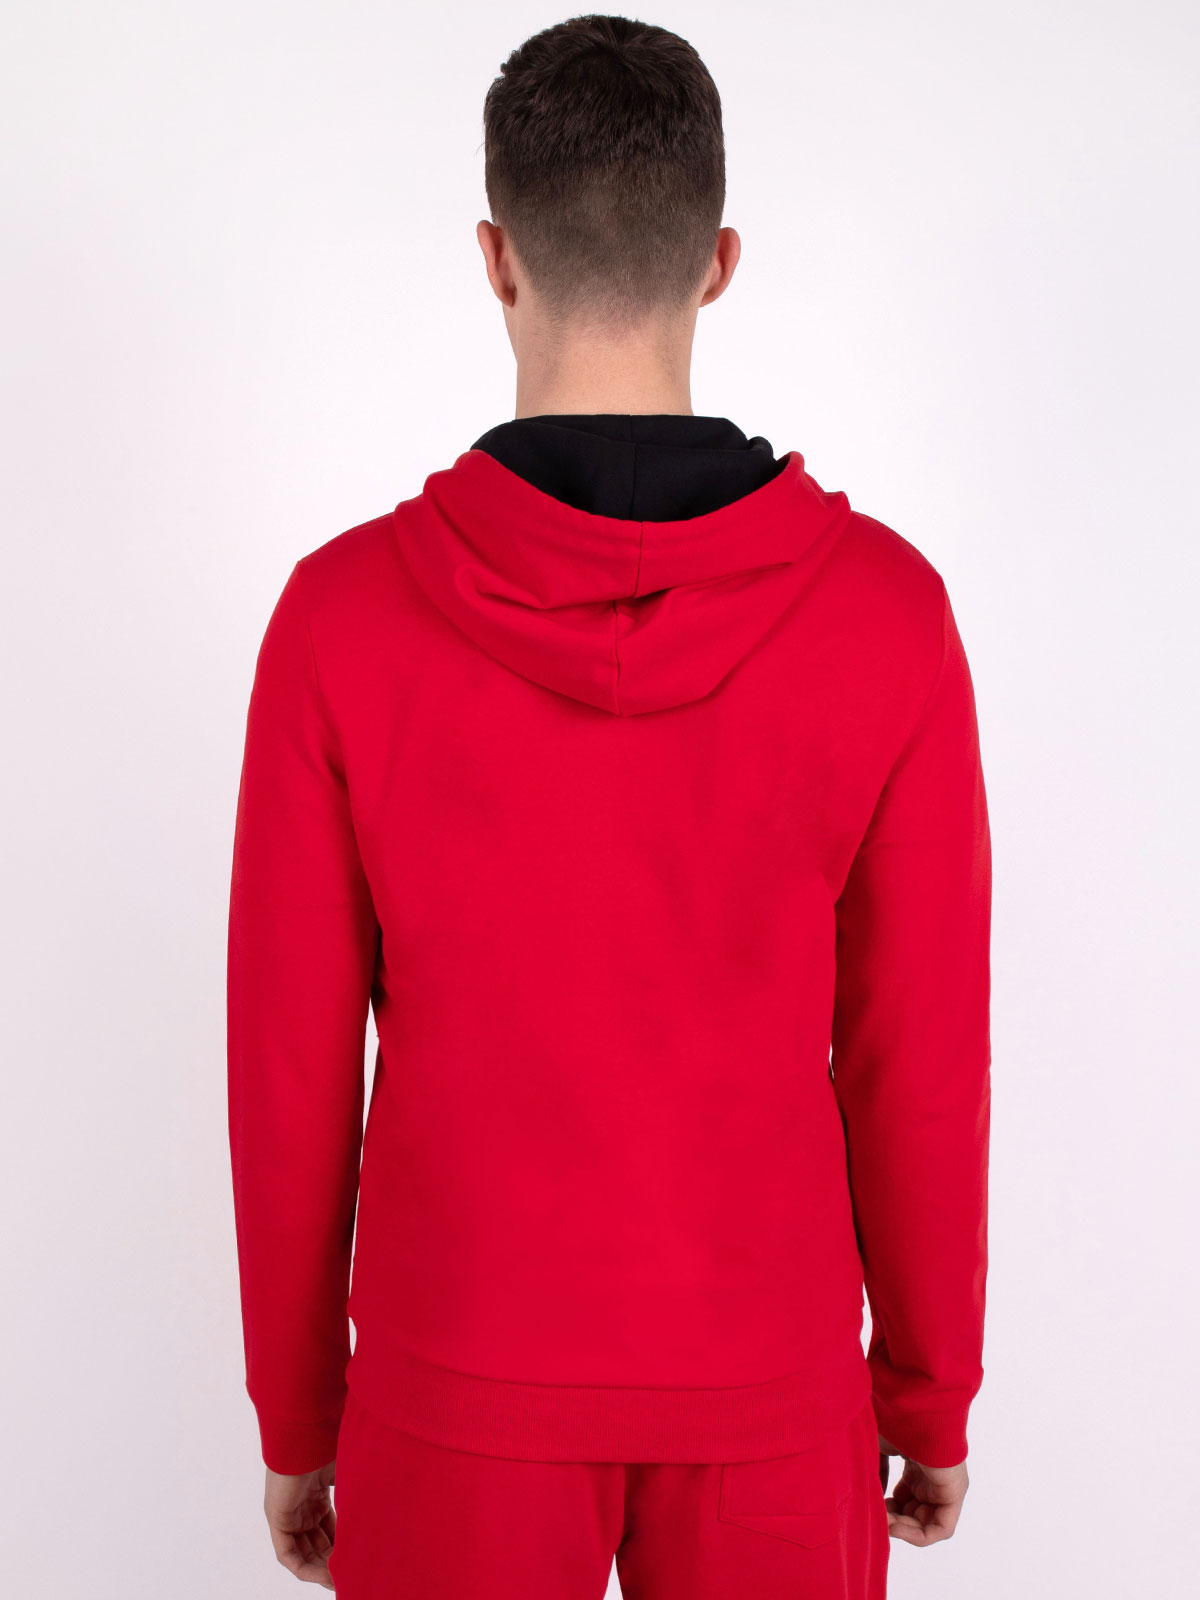 Sport sweatshirt in red with hood - 28090 € 27.56 img4